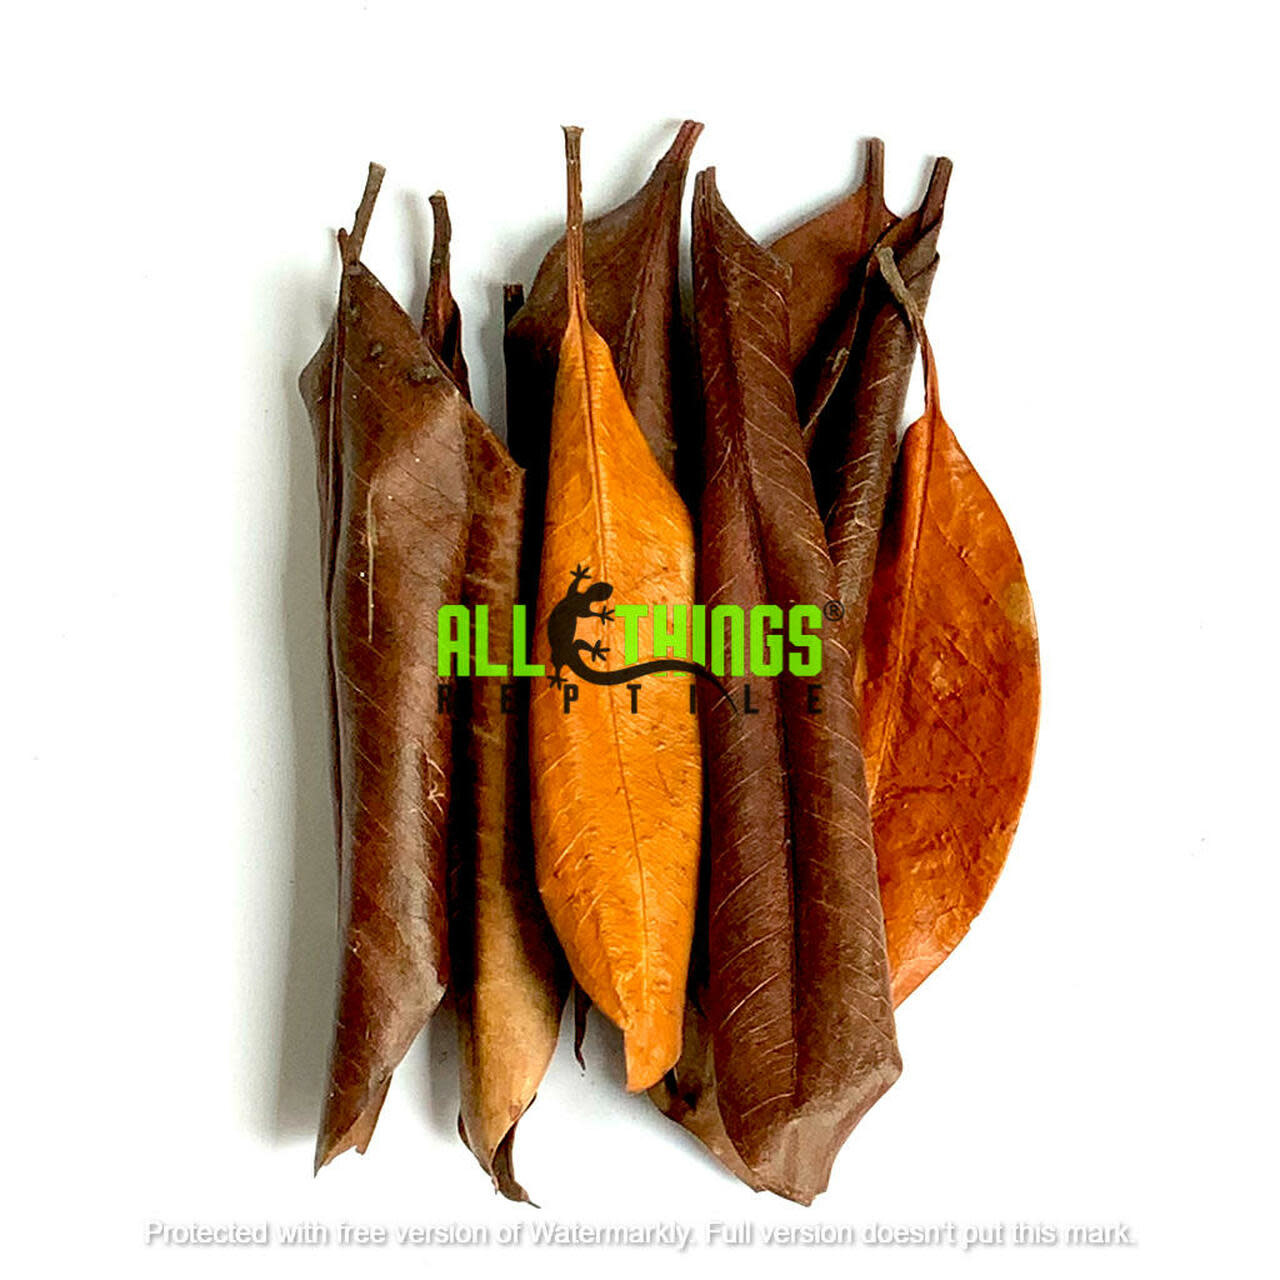 All things reptile Petites feuilles de Mangue pq 10 - Mango Small Leaves 10-pack